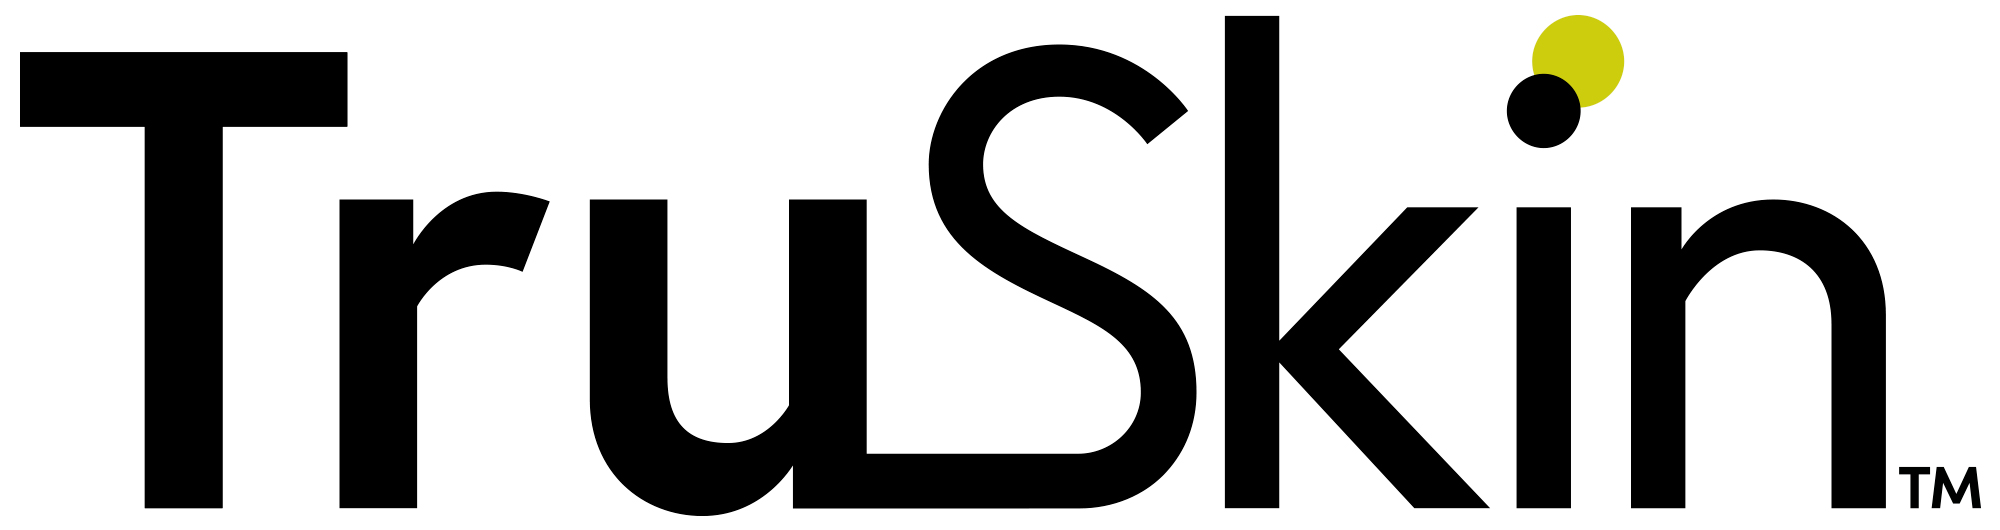 trueskin-logo